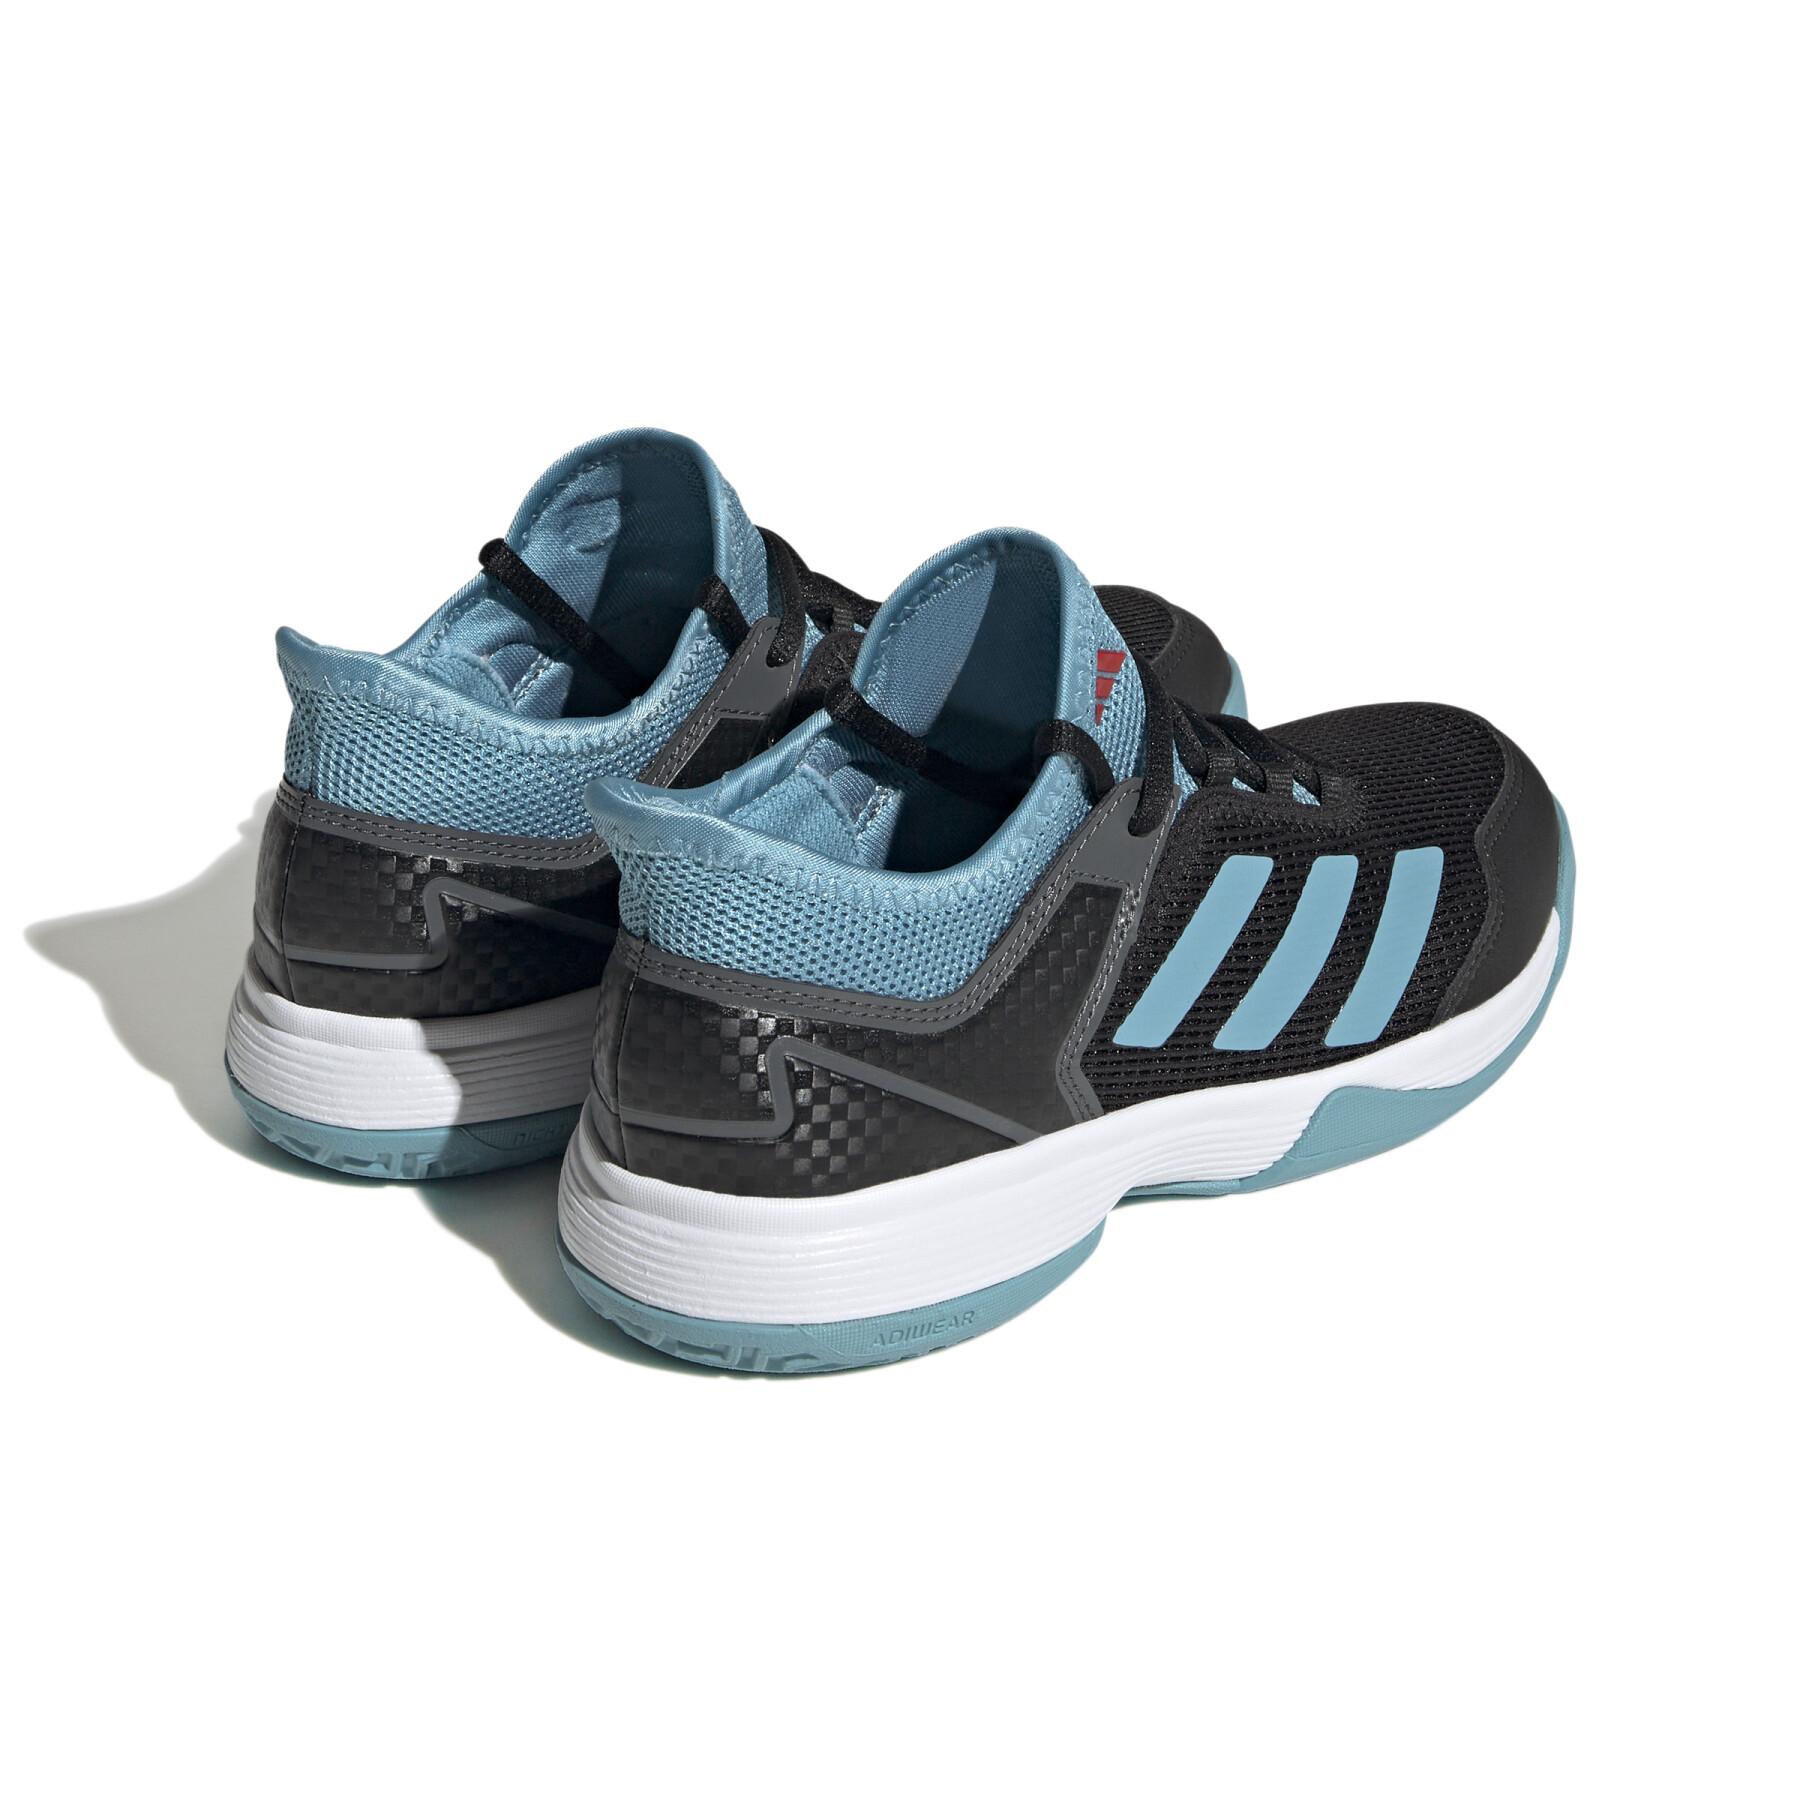 Children's tennis shoes adidas Ubersonic 4 K